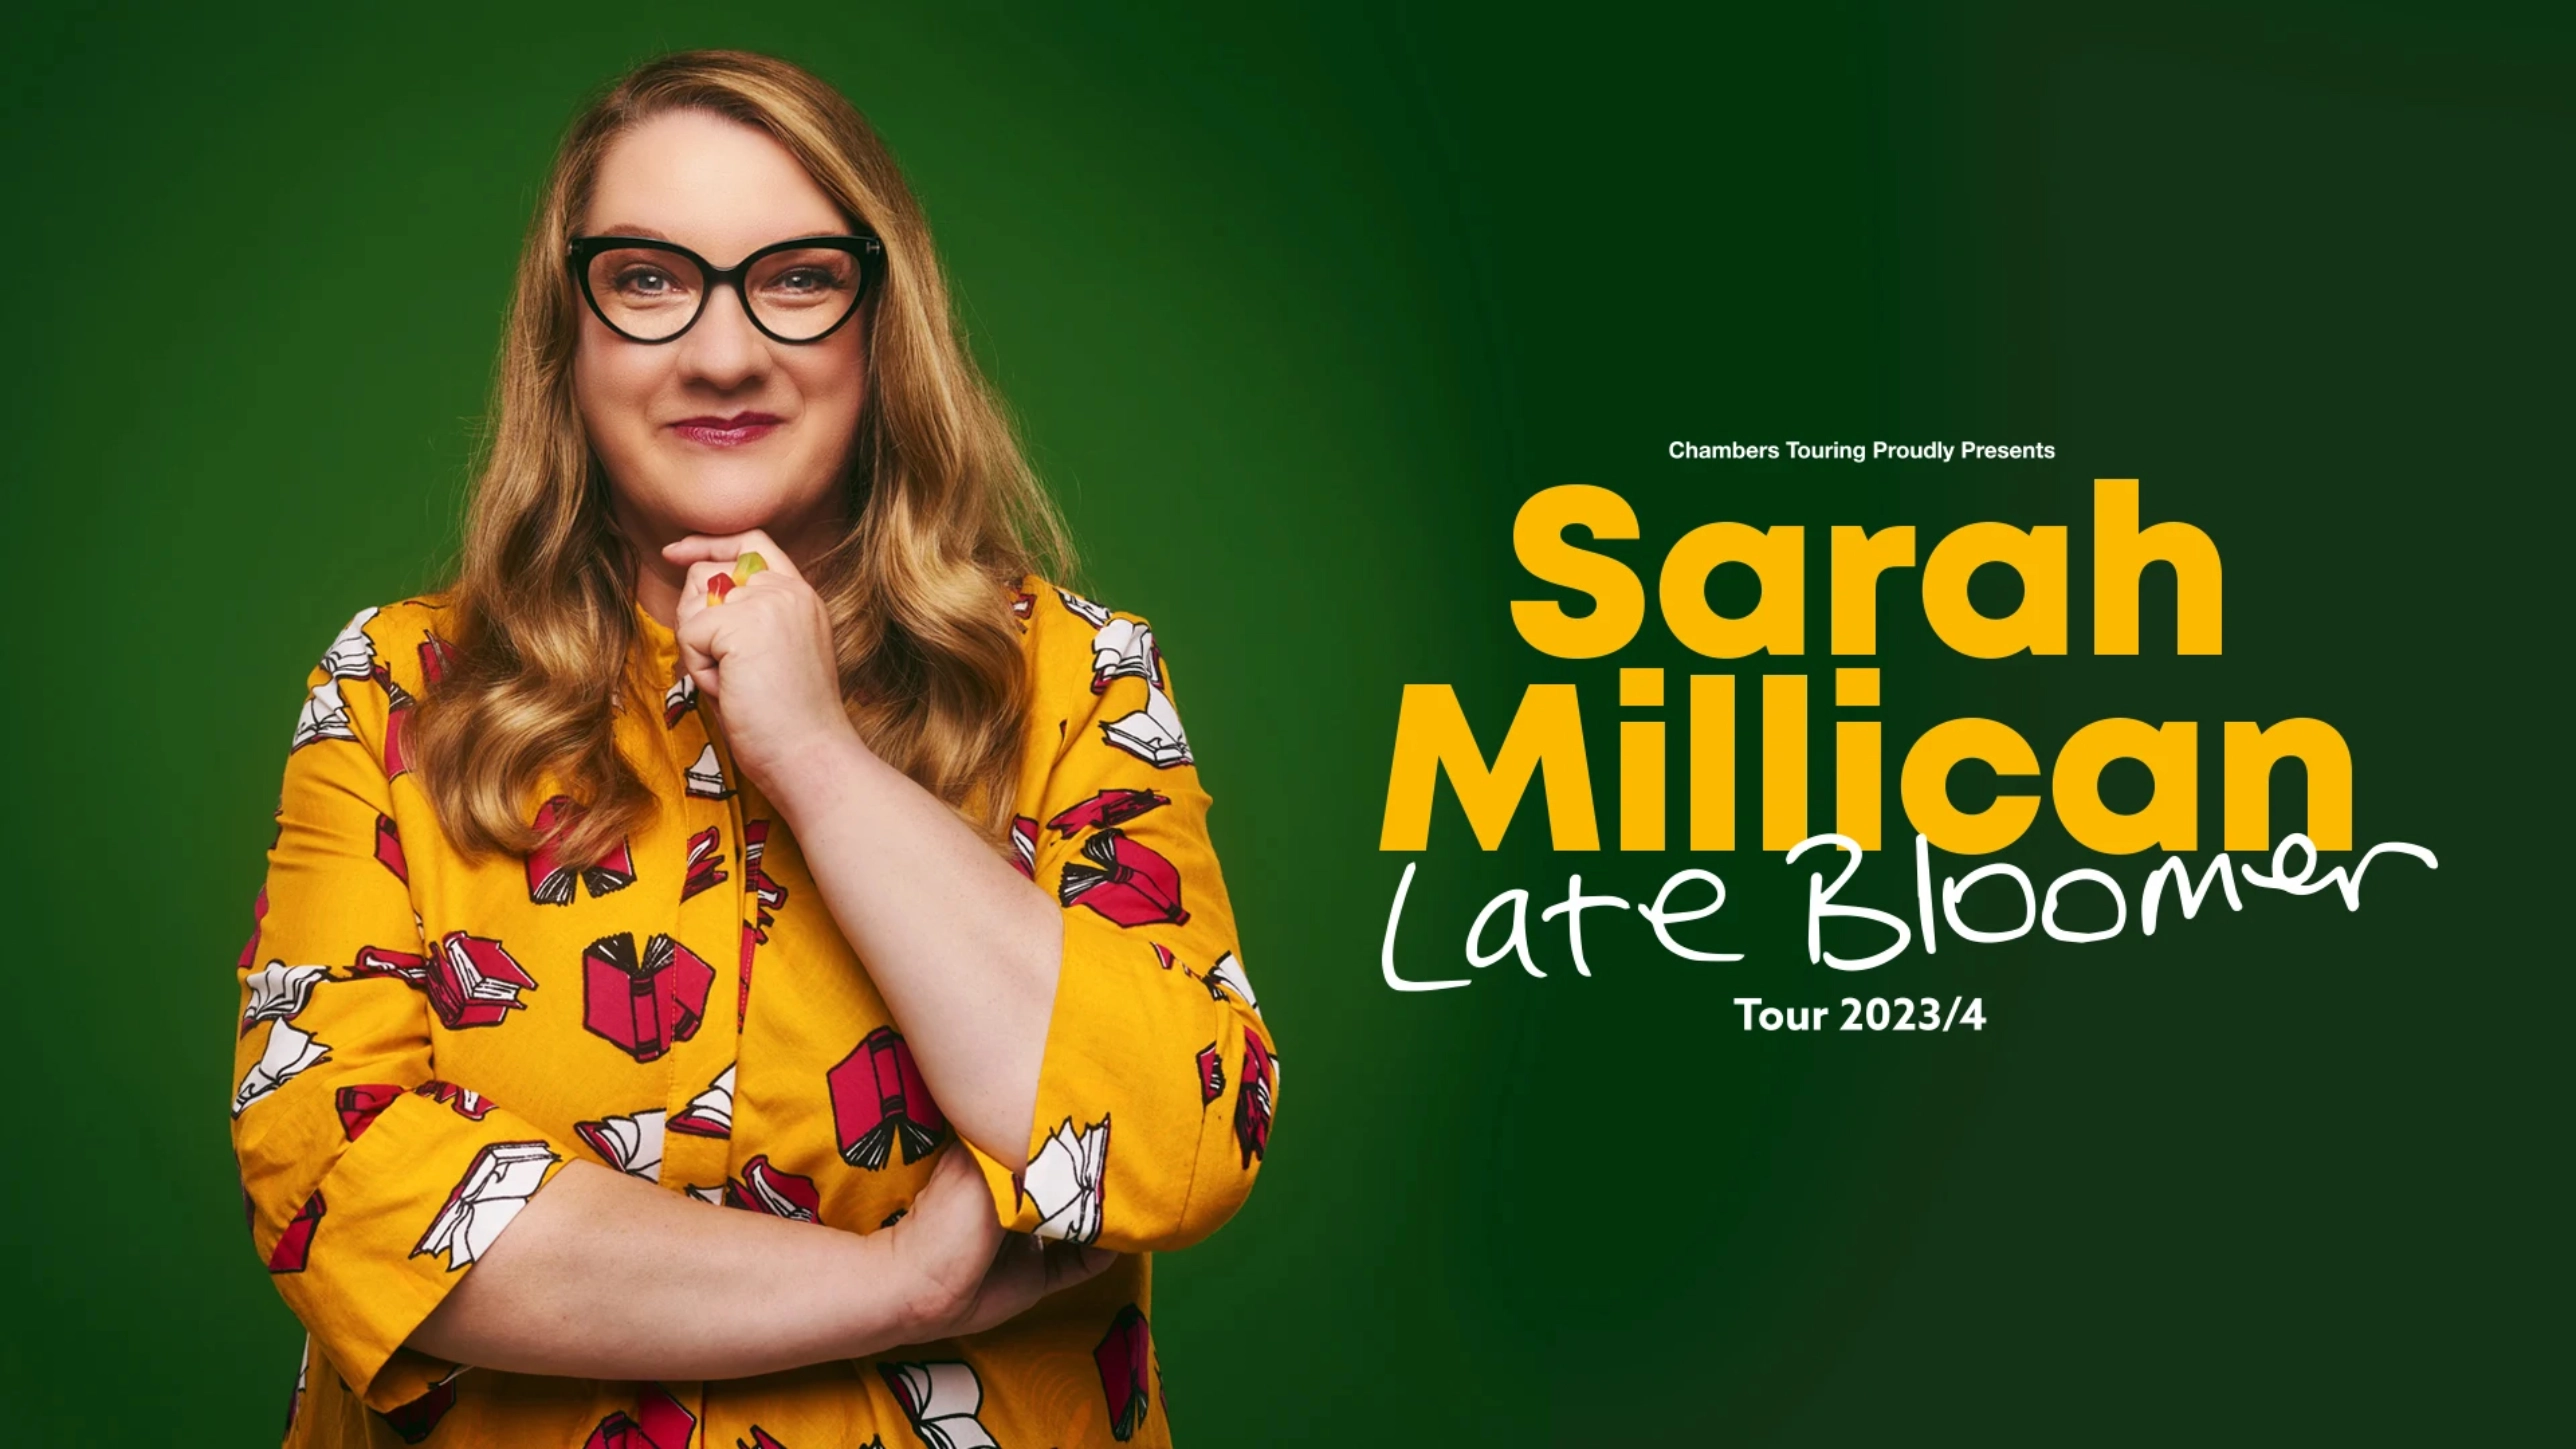 Sarah Millican: Late Bloomer